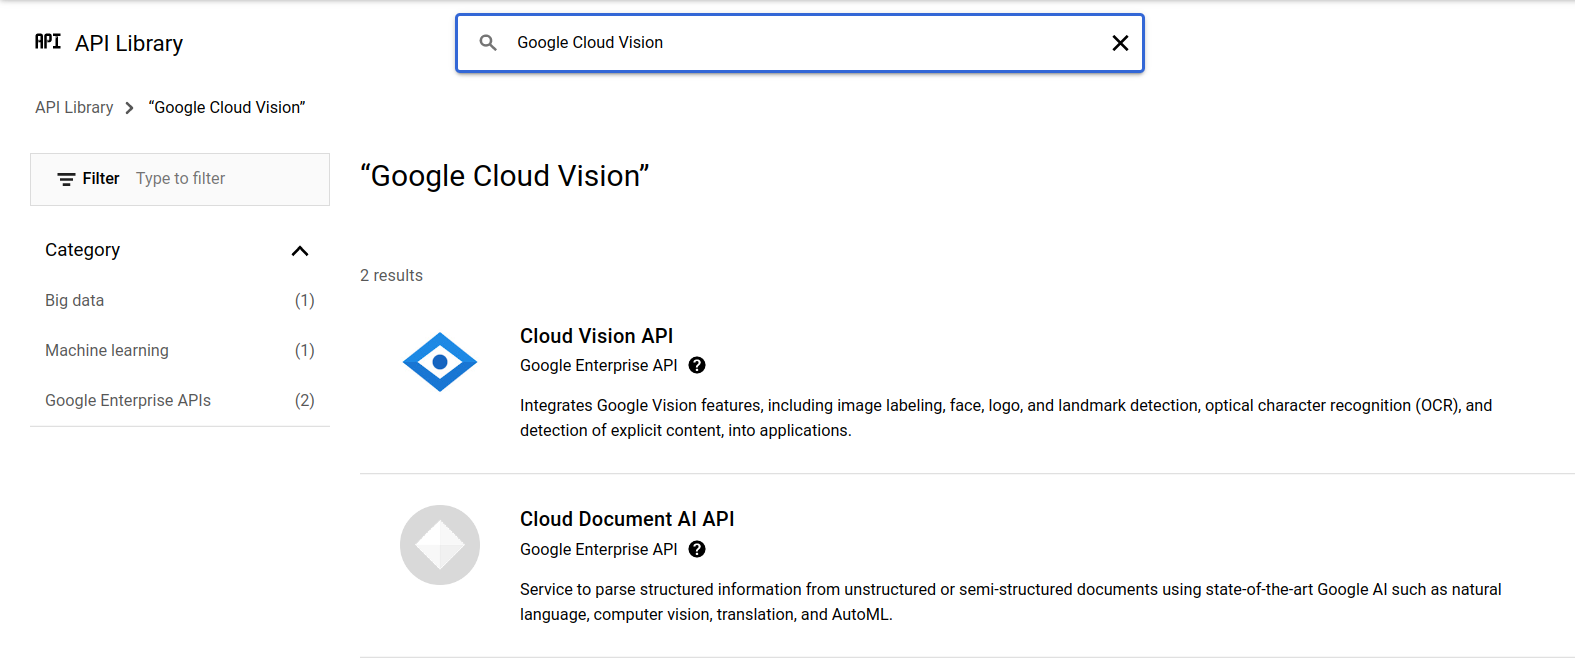 Google Cloud VIsion